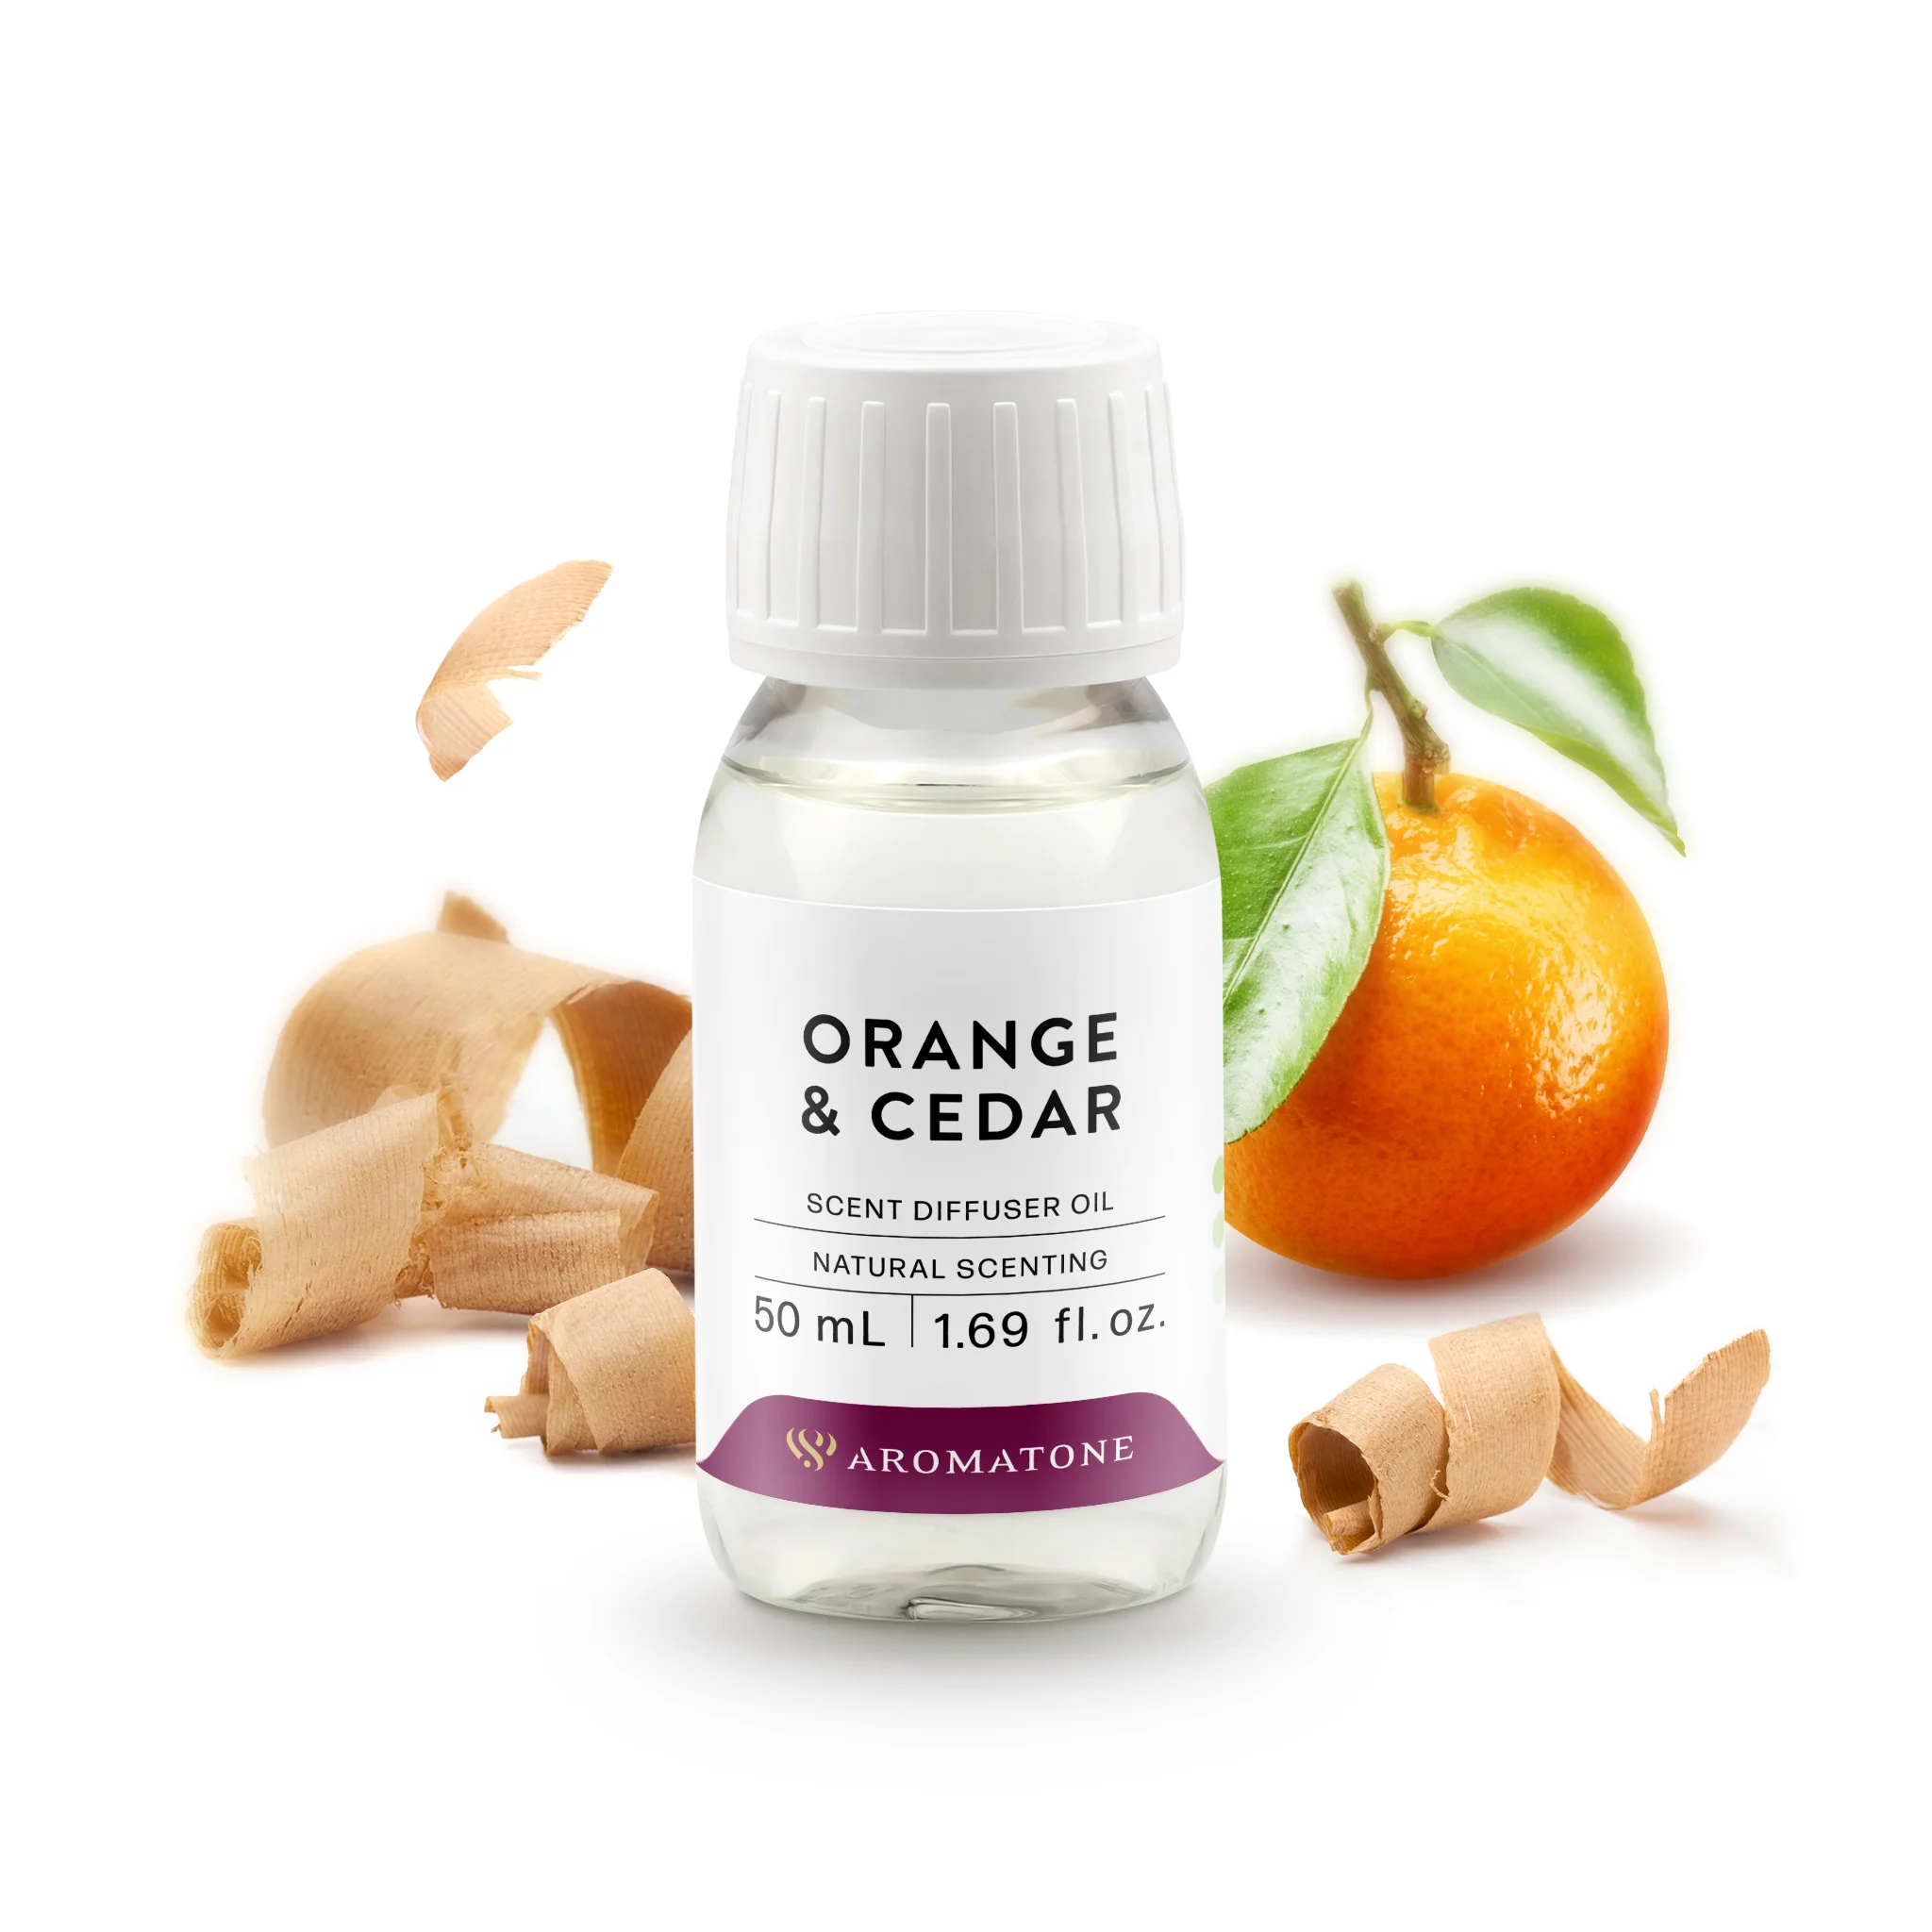 Orange & Cedar essential oil